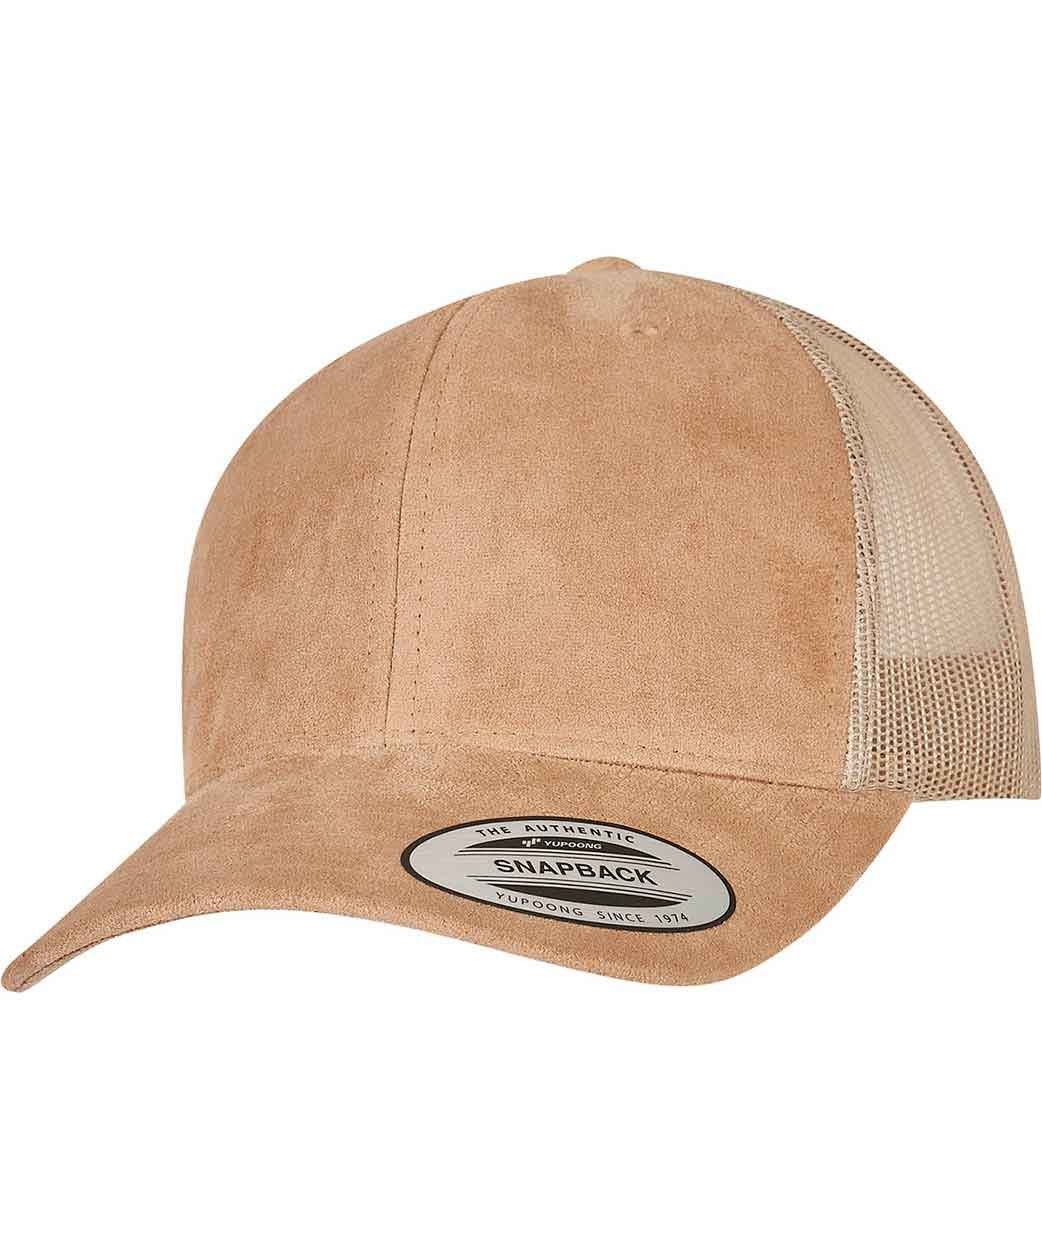 Flexfit by Yupoong 6606SU Imitation suede leather trucker cap - Baseball  Caps - Hats & Caps - Leisurewear - Best Workwear